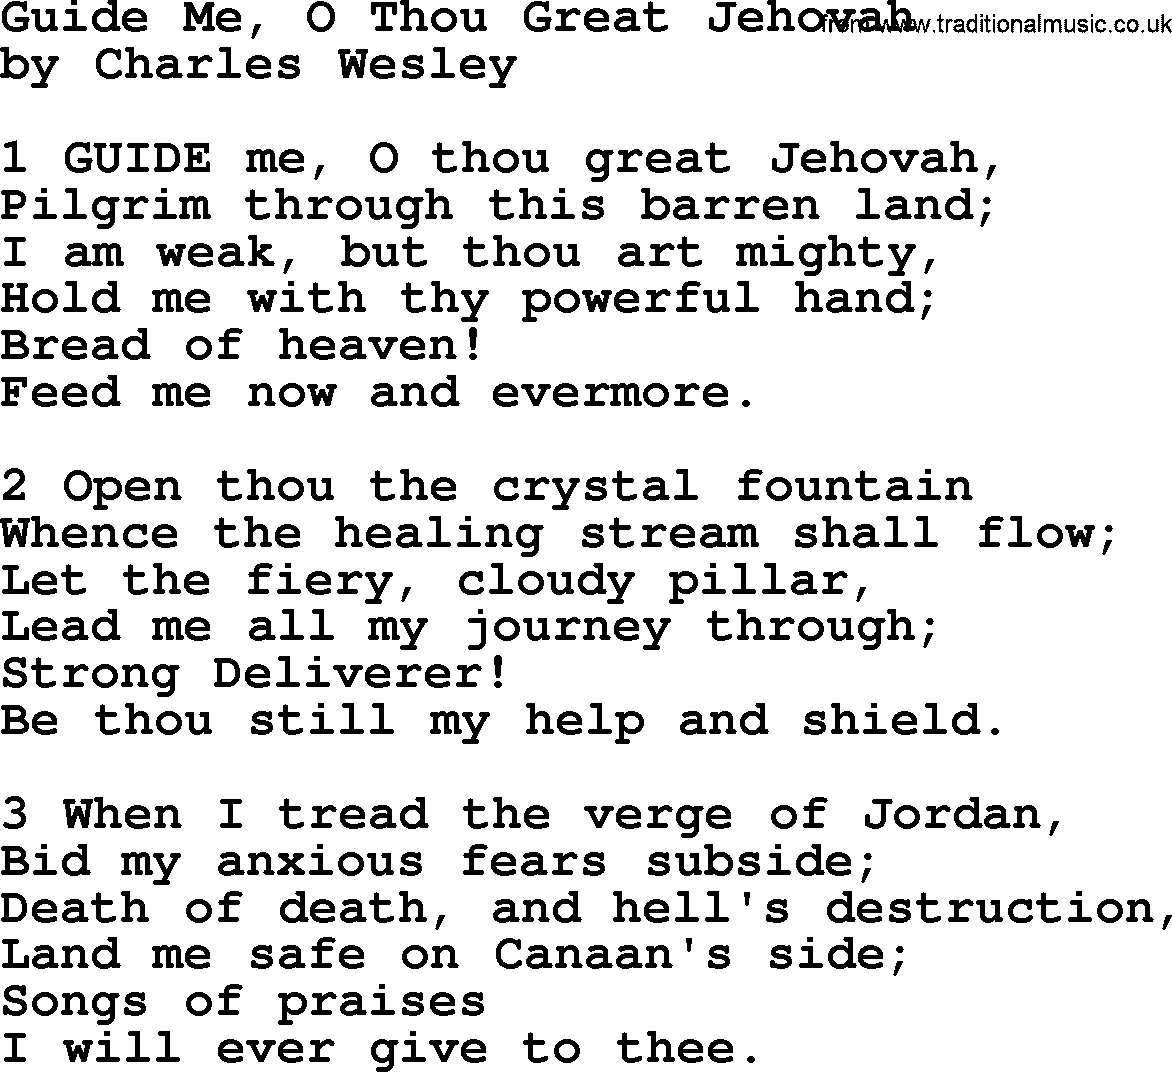 Charles Wesley hymn: Guide Me, O Thou Great Jehovah, lyrics